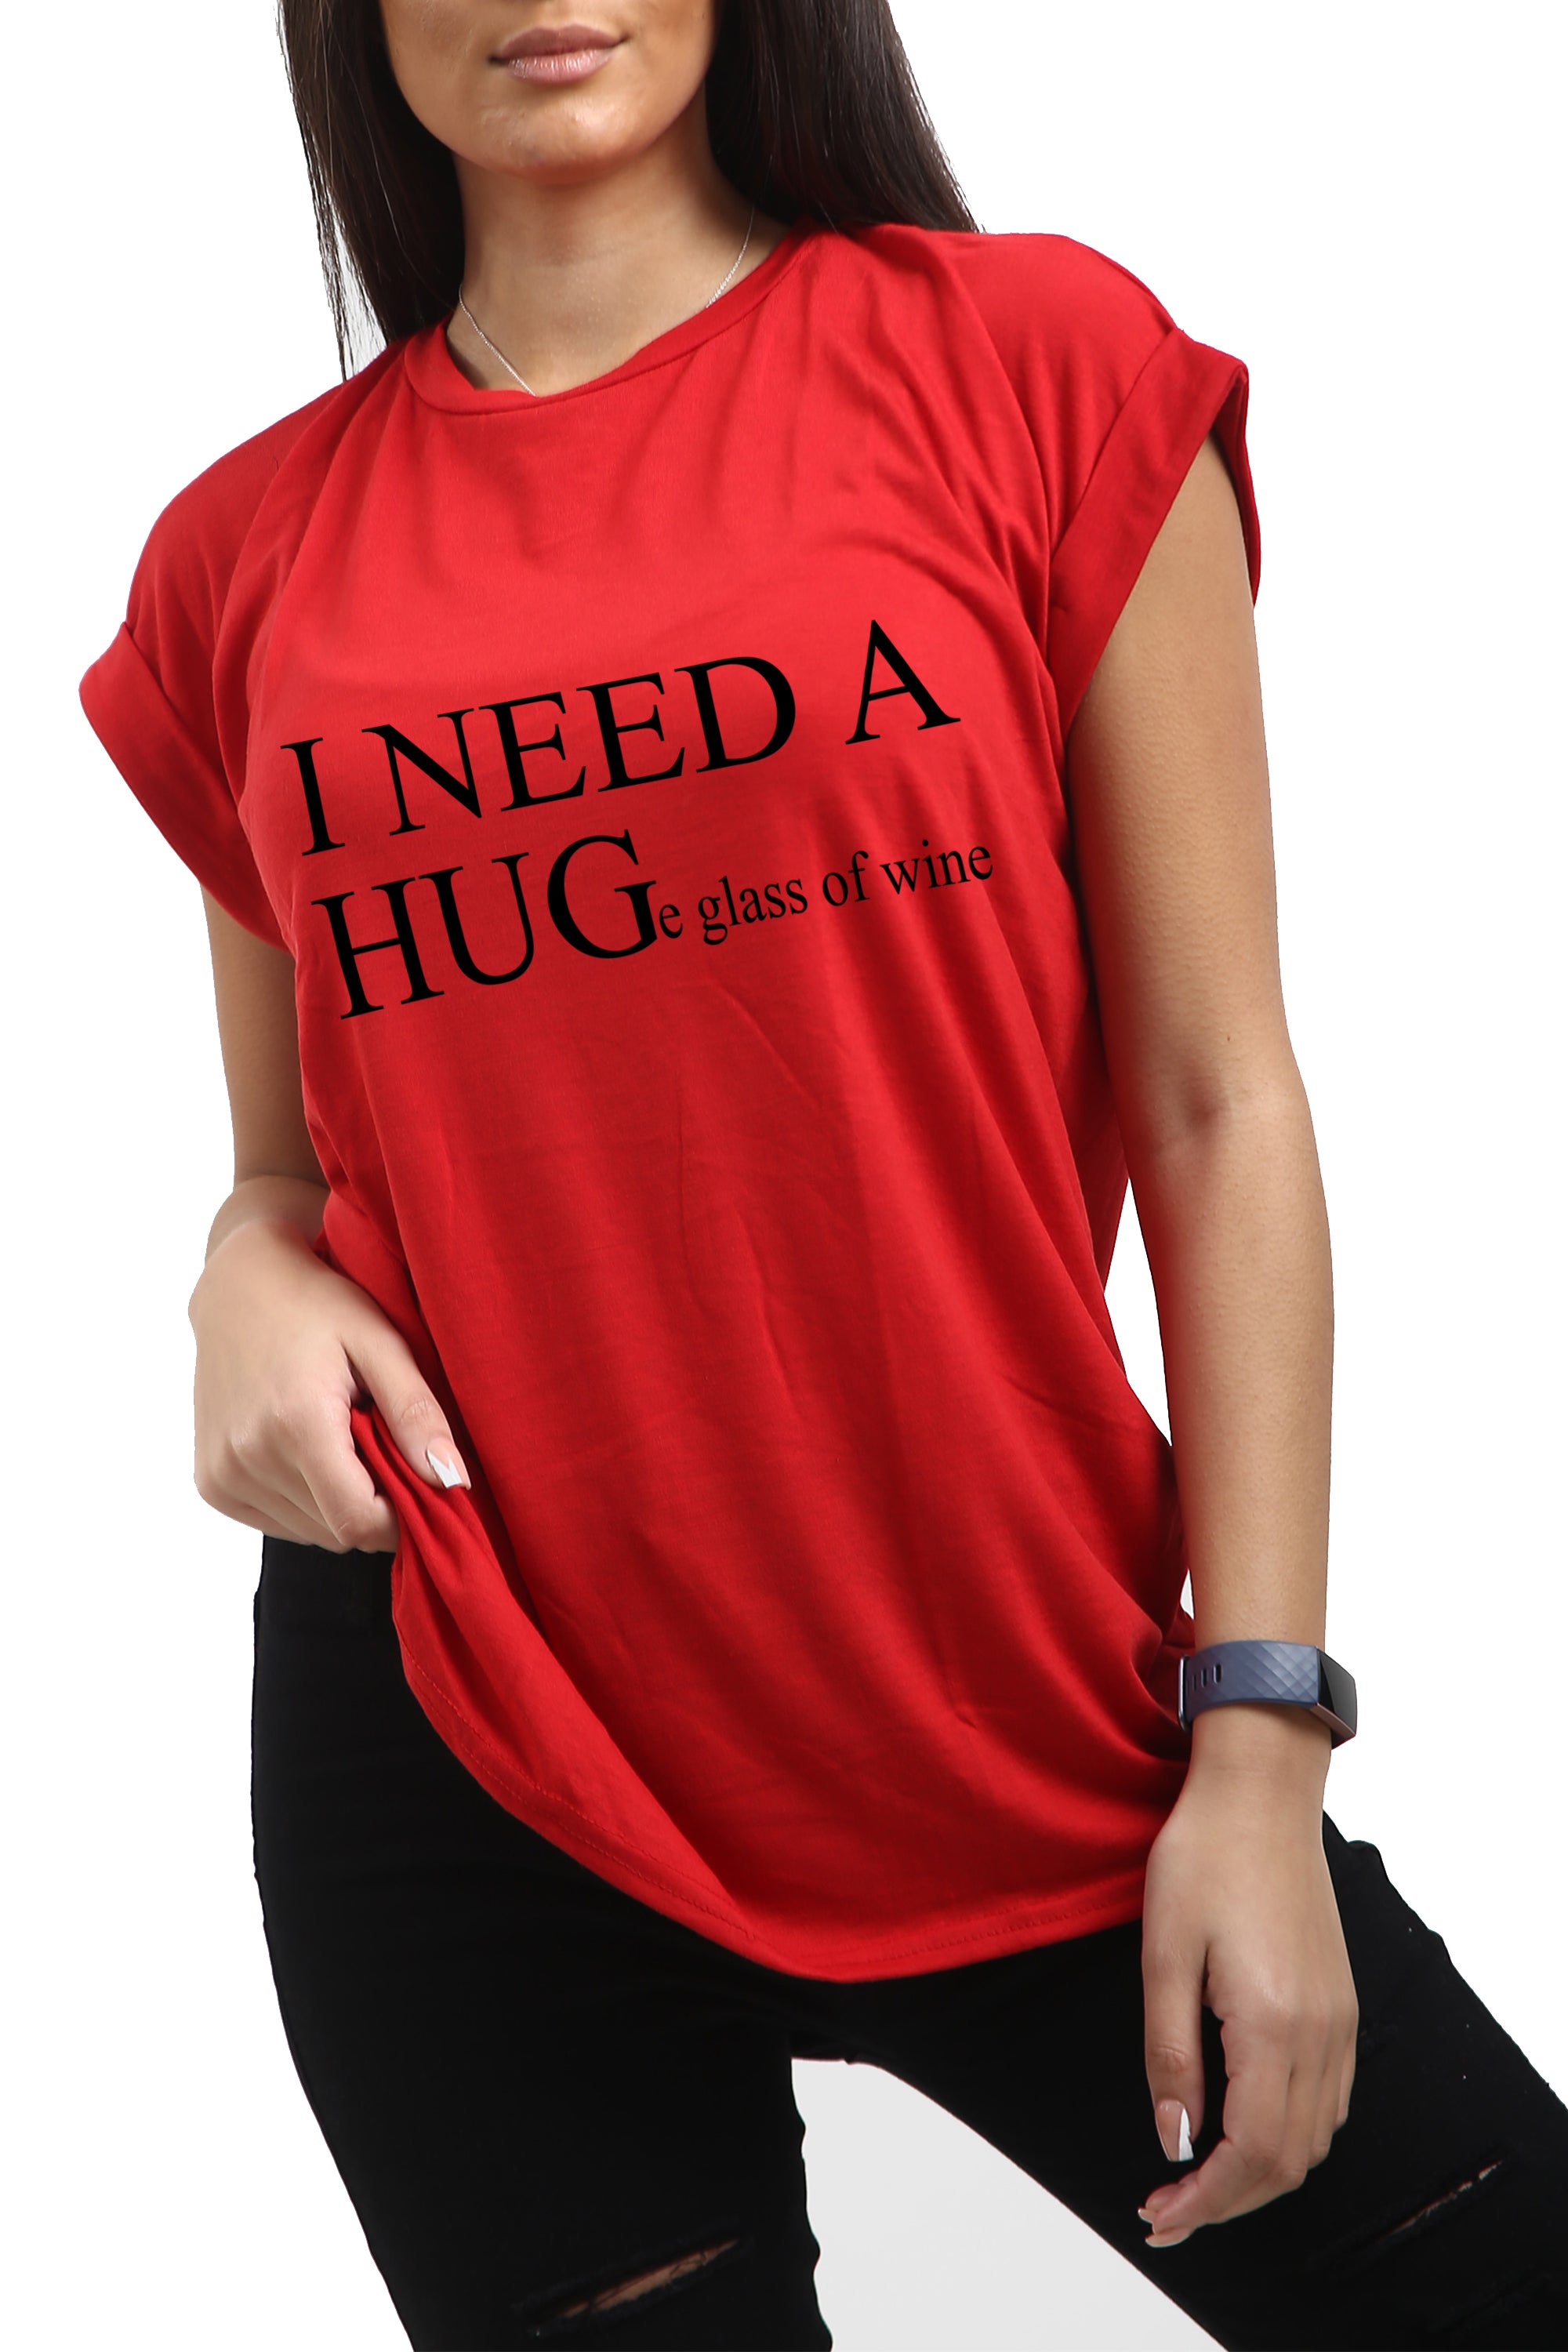 Kelly I NEED A HUG Printed Basic Top